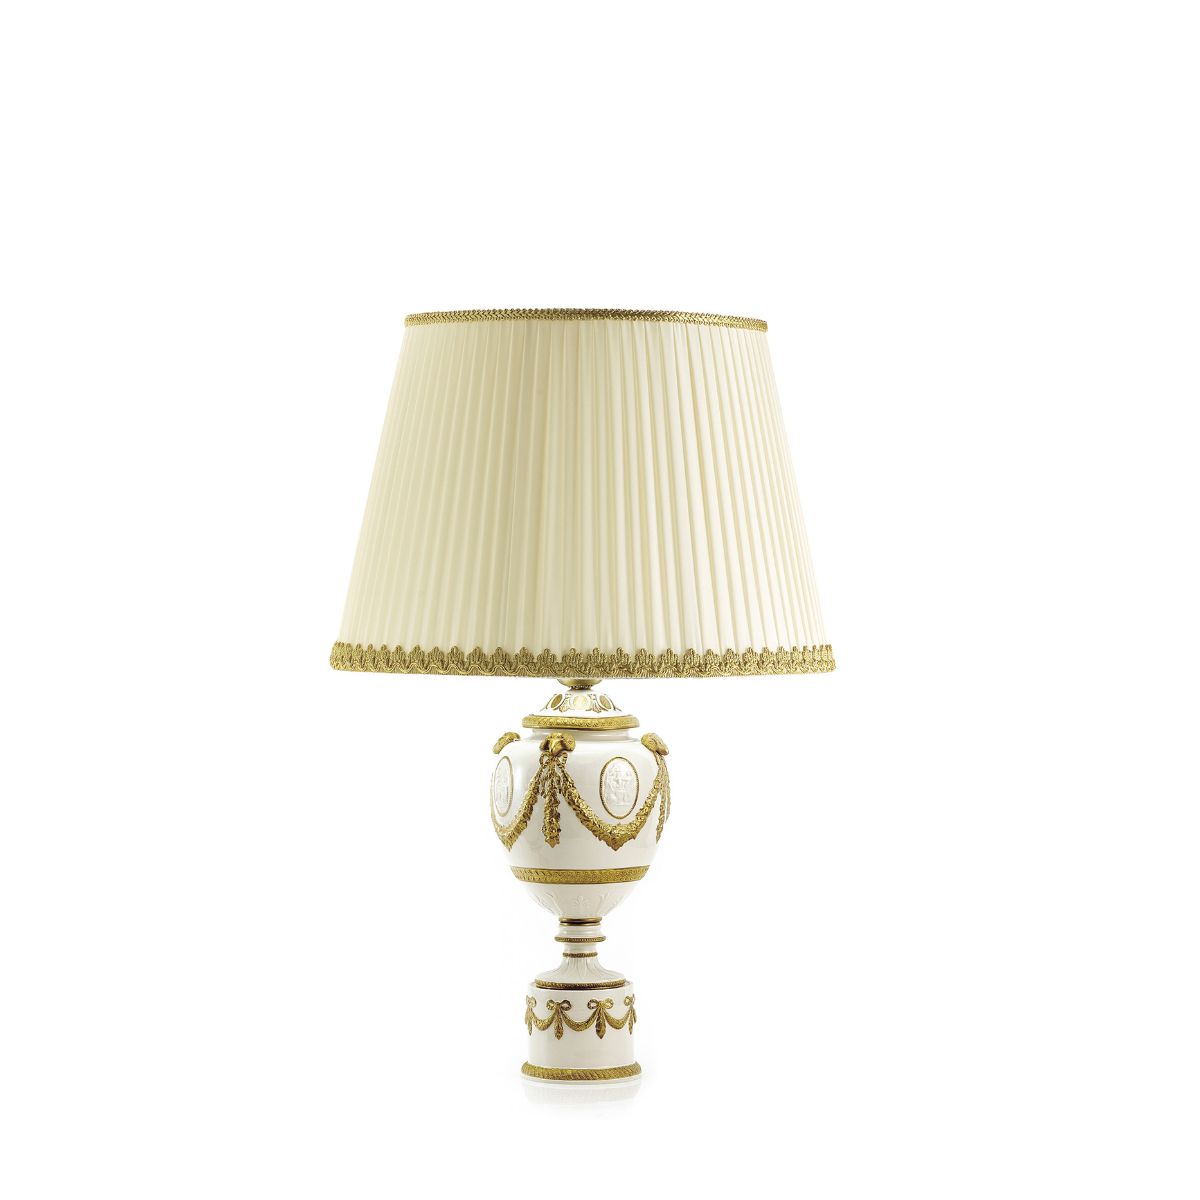 Napoleon Small Table Lamp - White & Gold